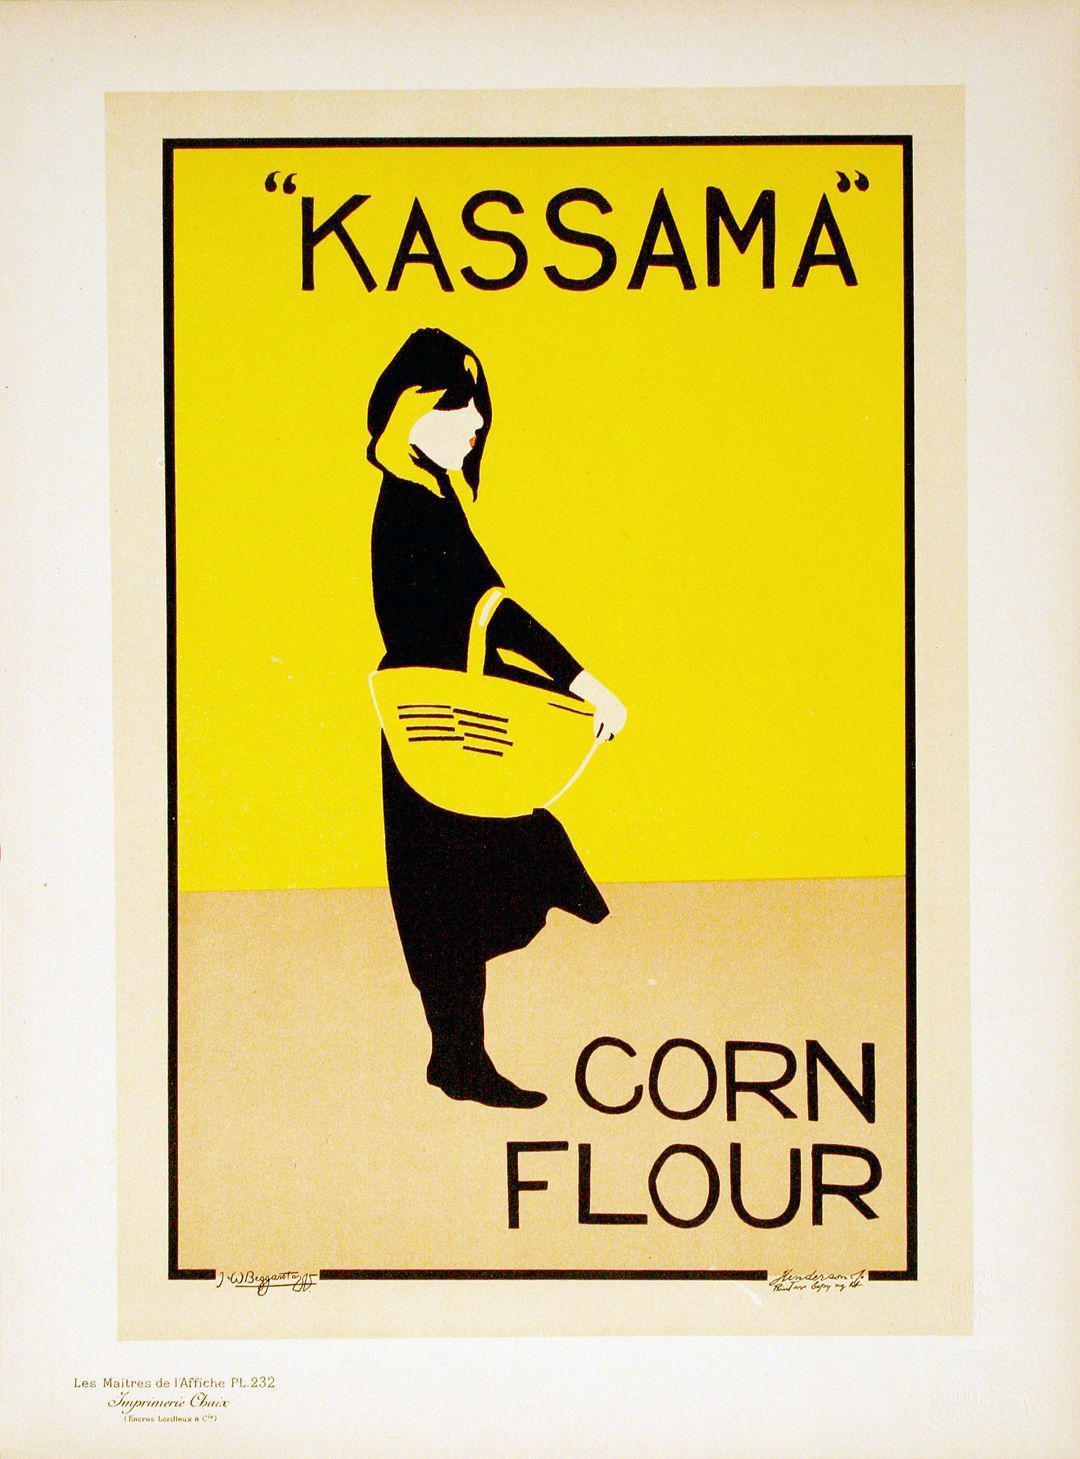 Original Vintage Maitres de l'Affiche Kassama Corn Flour by Beggarstaff Plate 232